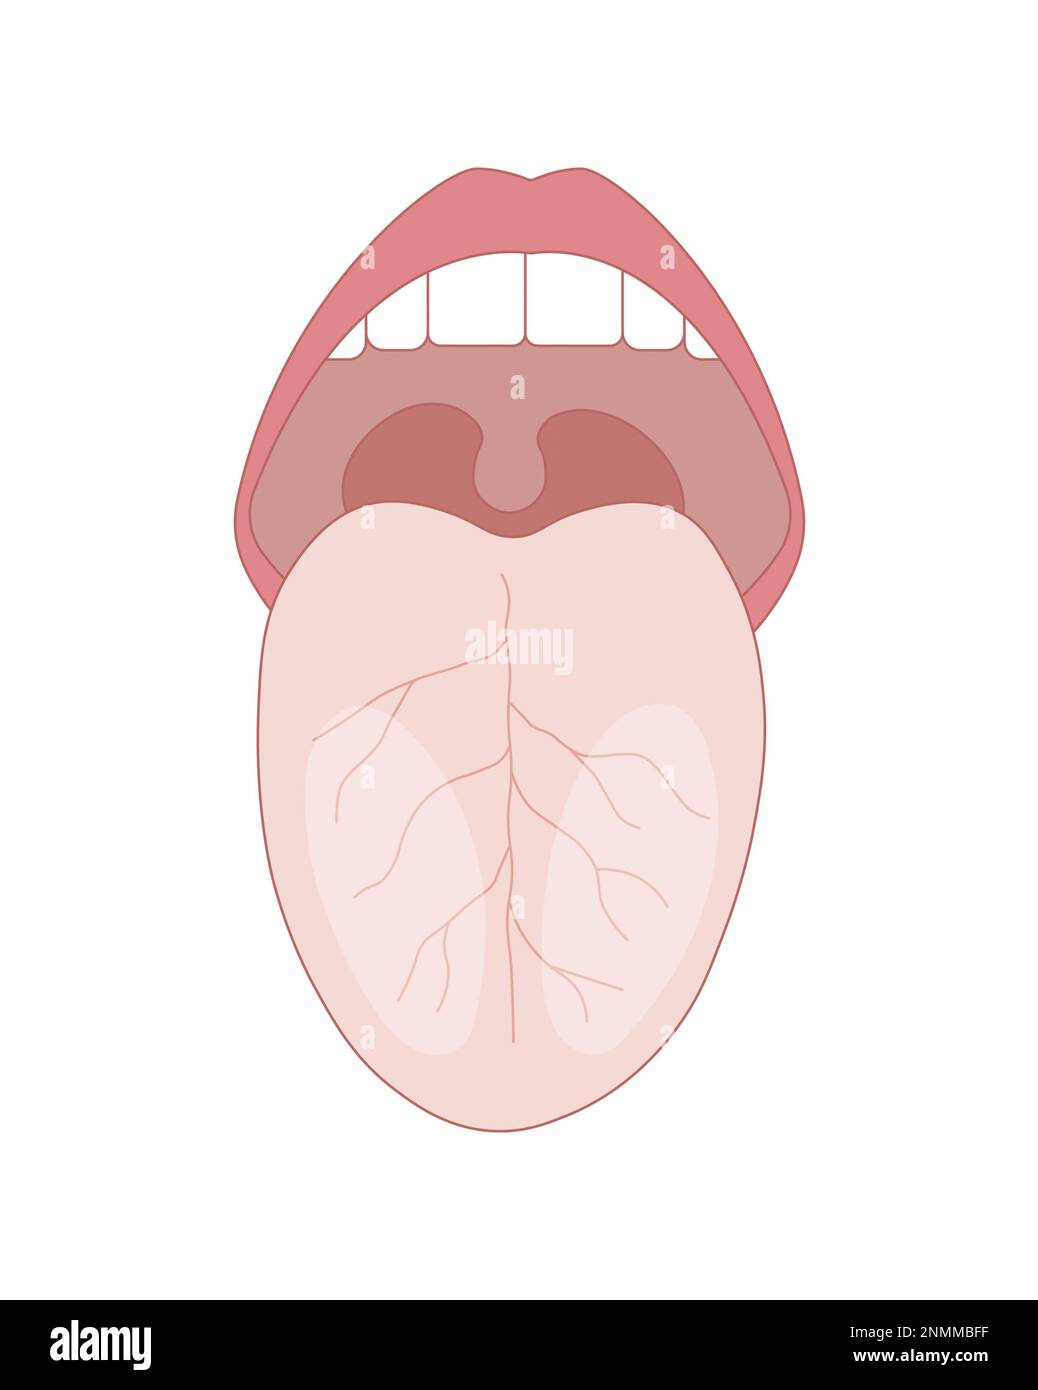 Human tongue, illustration Stock Photo